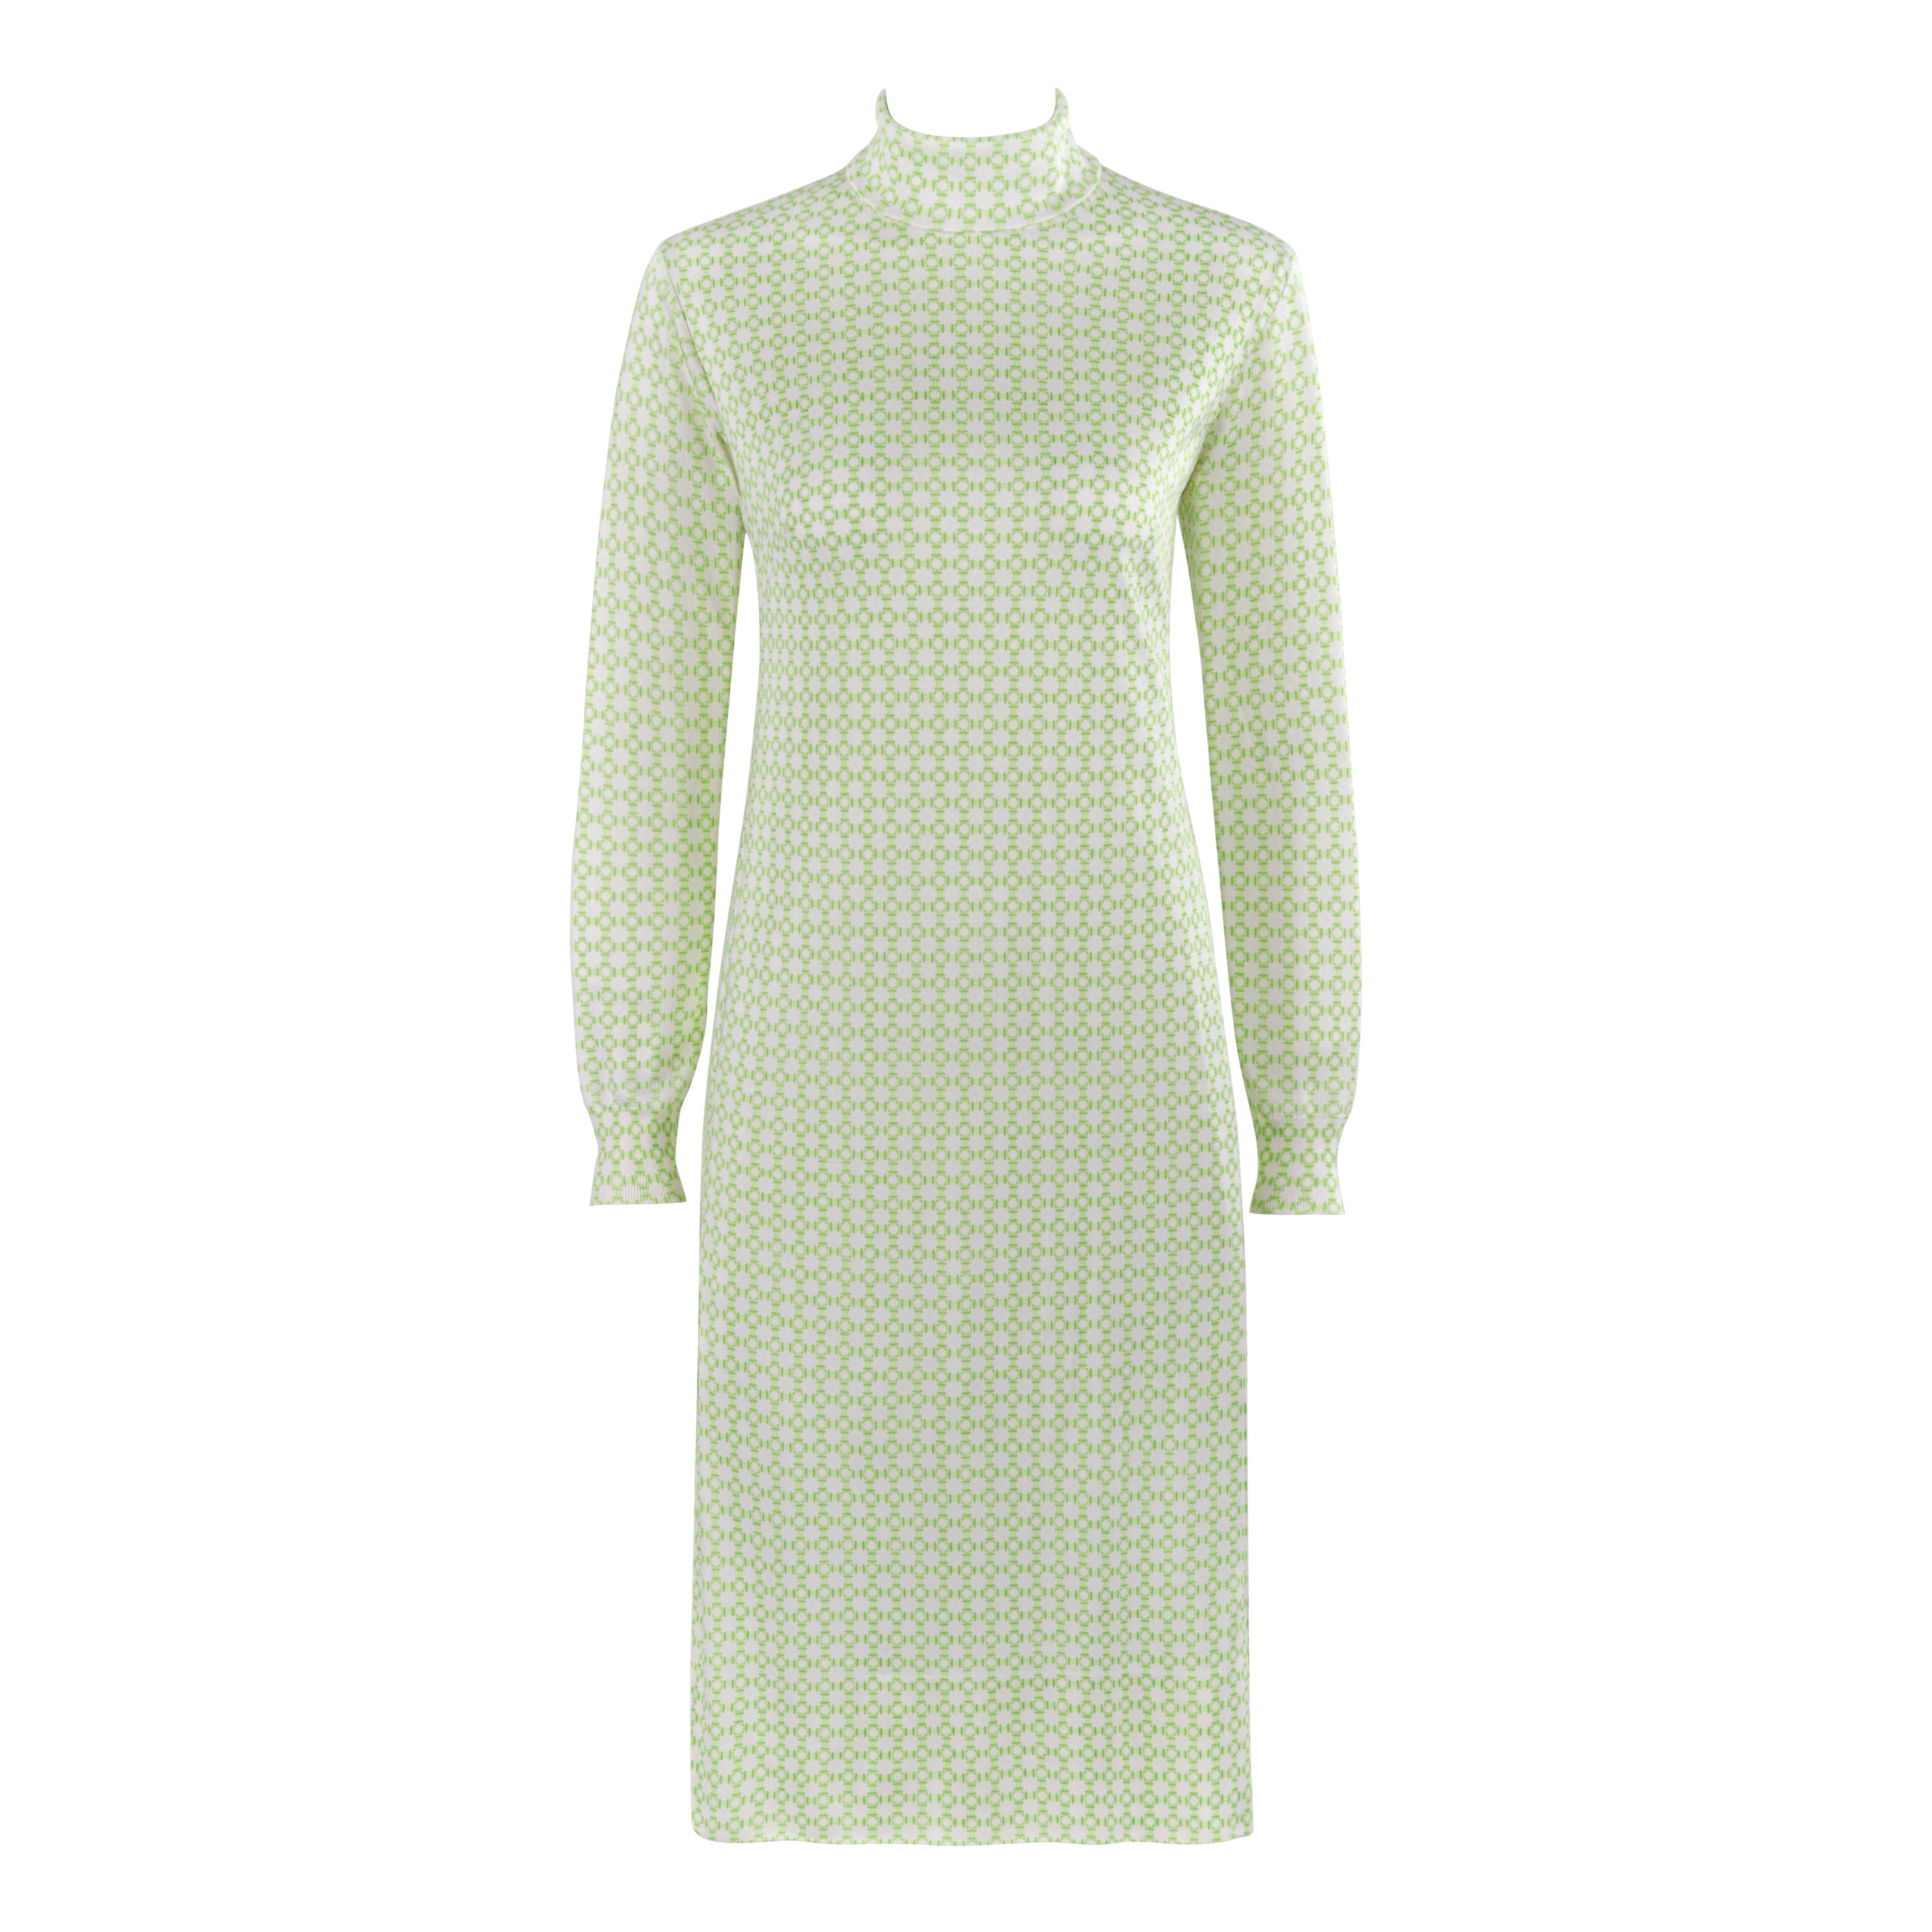 HERMES c.1970s Green White Printed Knit Long Sleeve Turtleneck Midi Dress For Sale